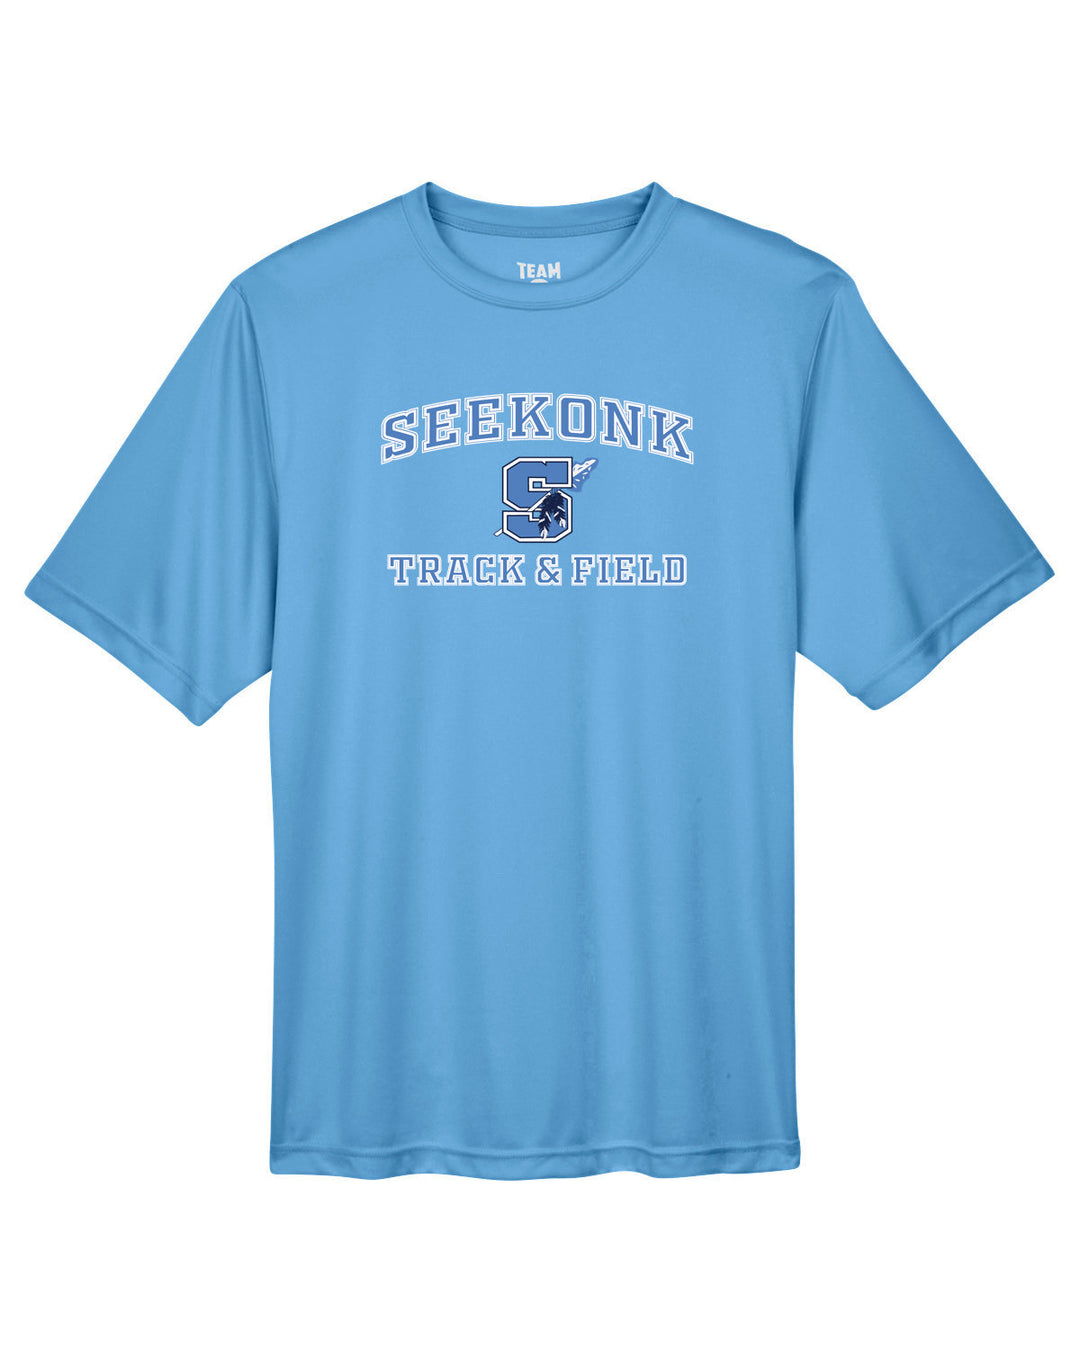 Seekonk Track & Field Men's Performance T-Shirt (TT11)